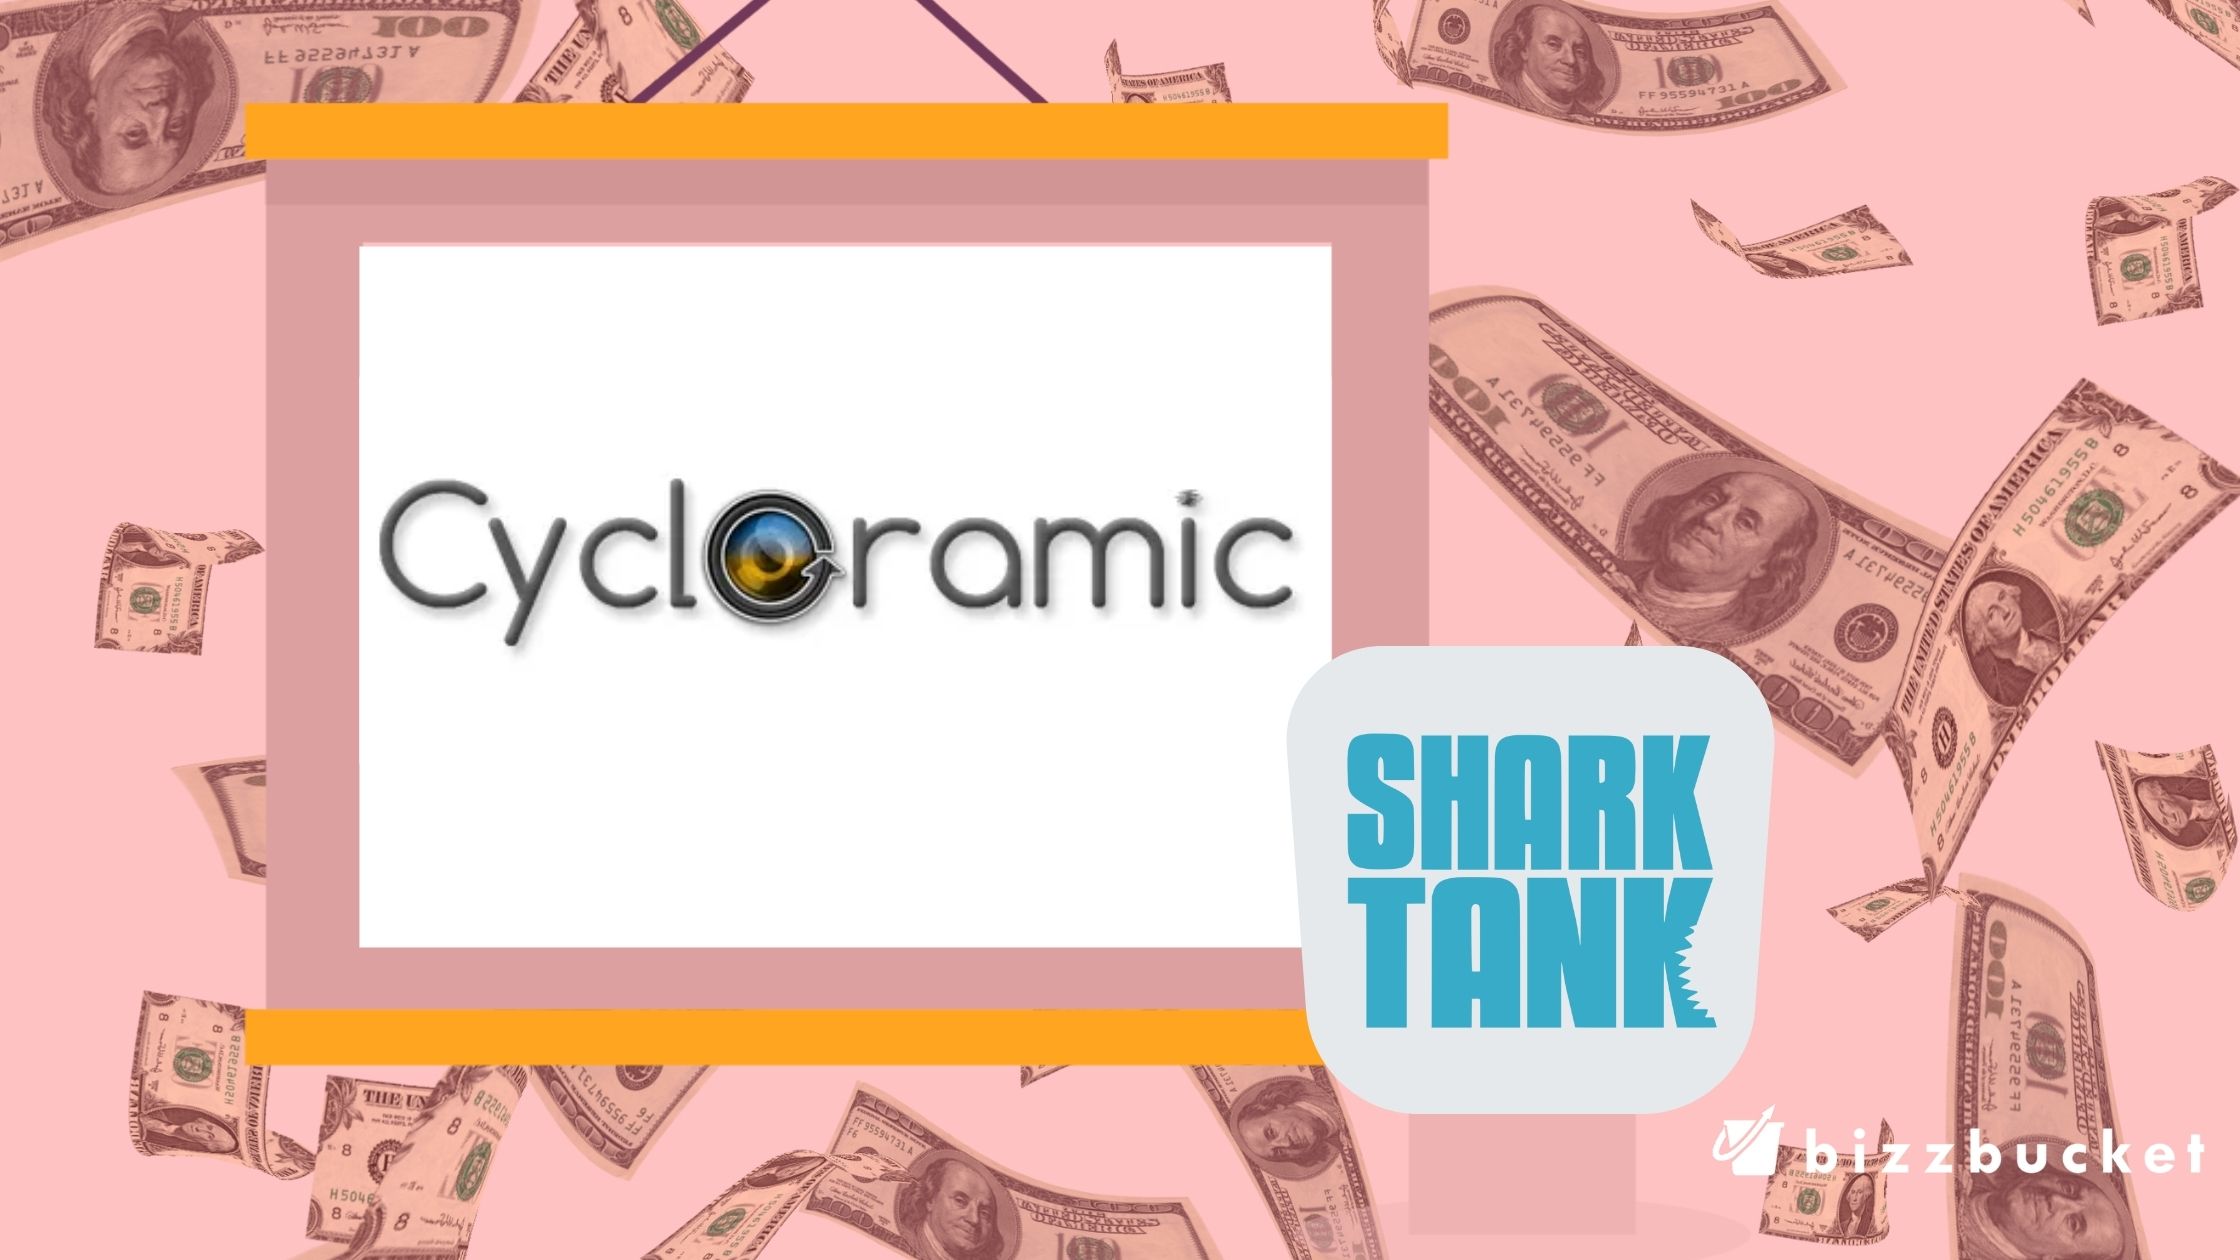 Cycloramic shark tank update